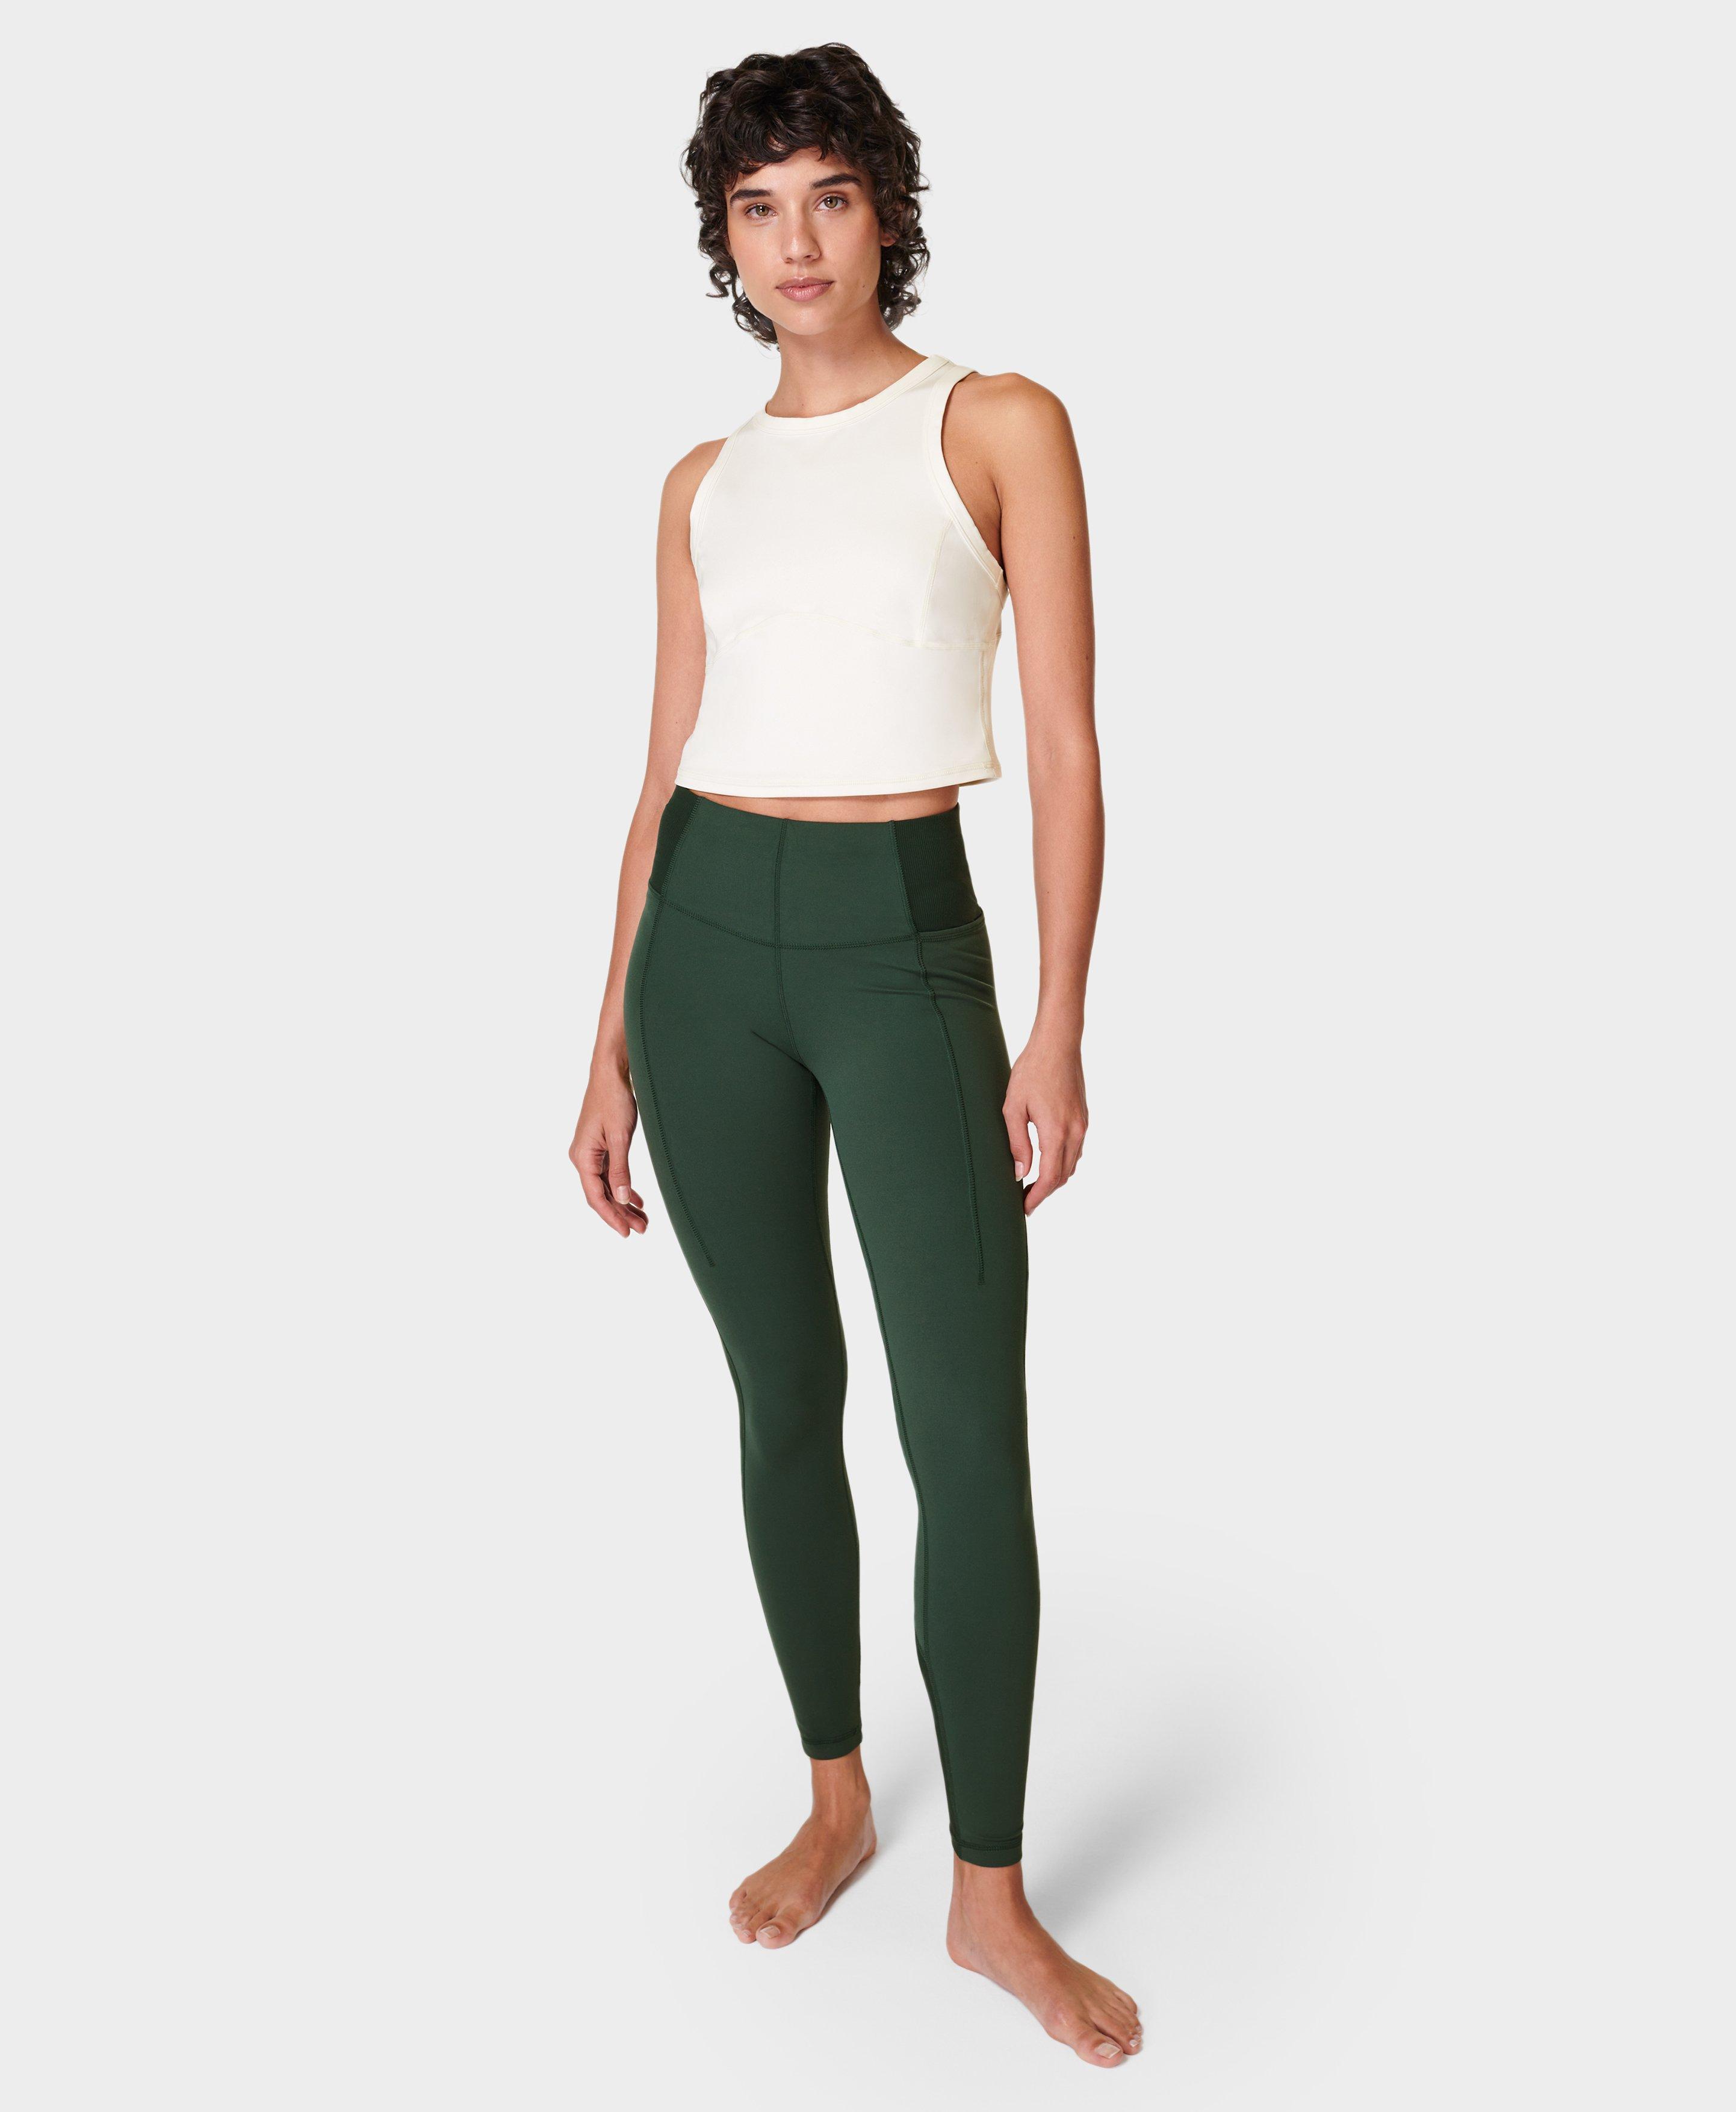 Lululemon Athletica Green Active Pants Size 20 (Plus) - 60% off